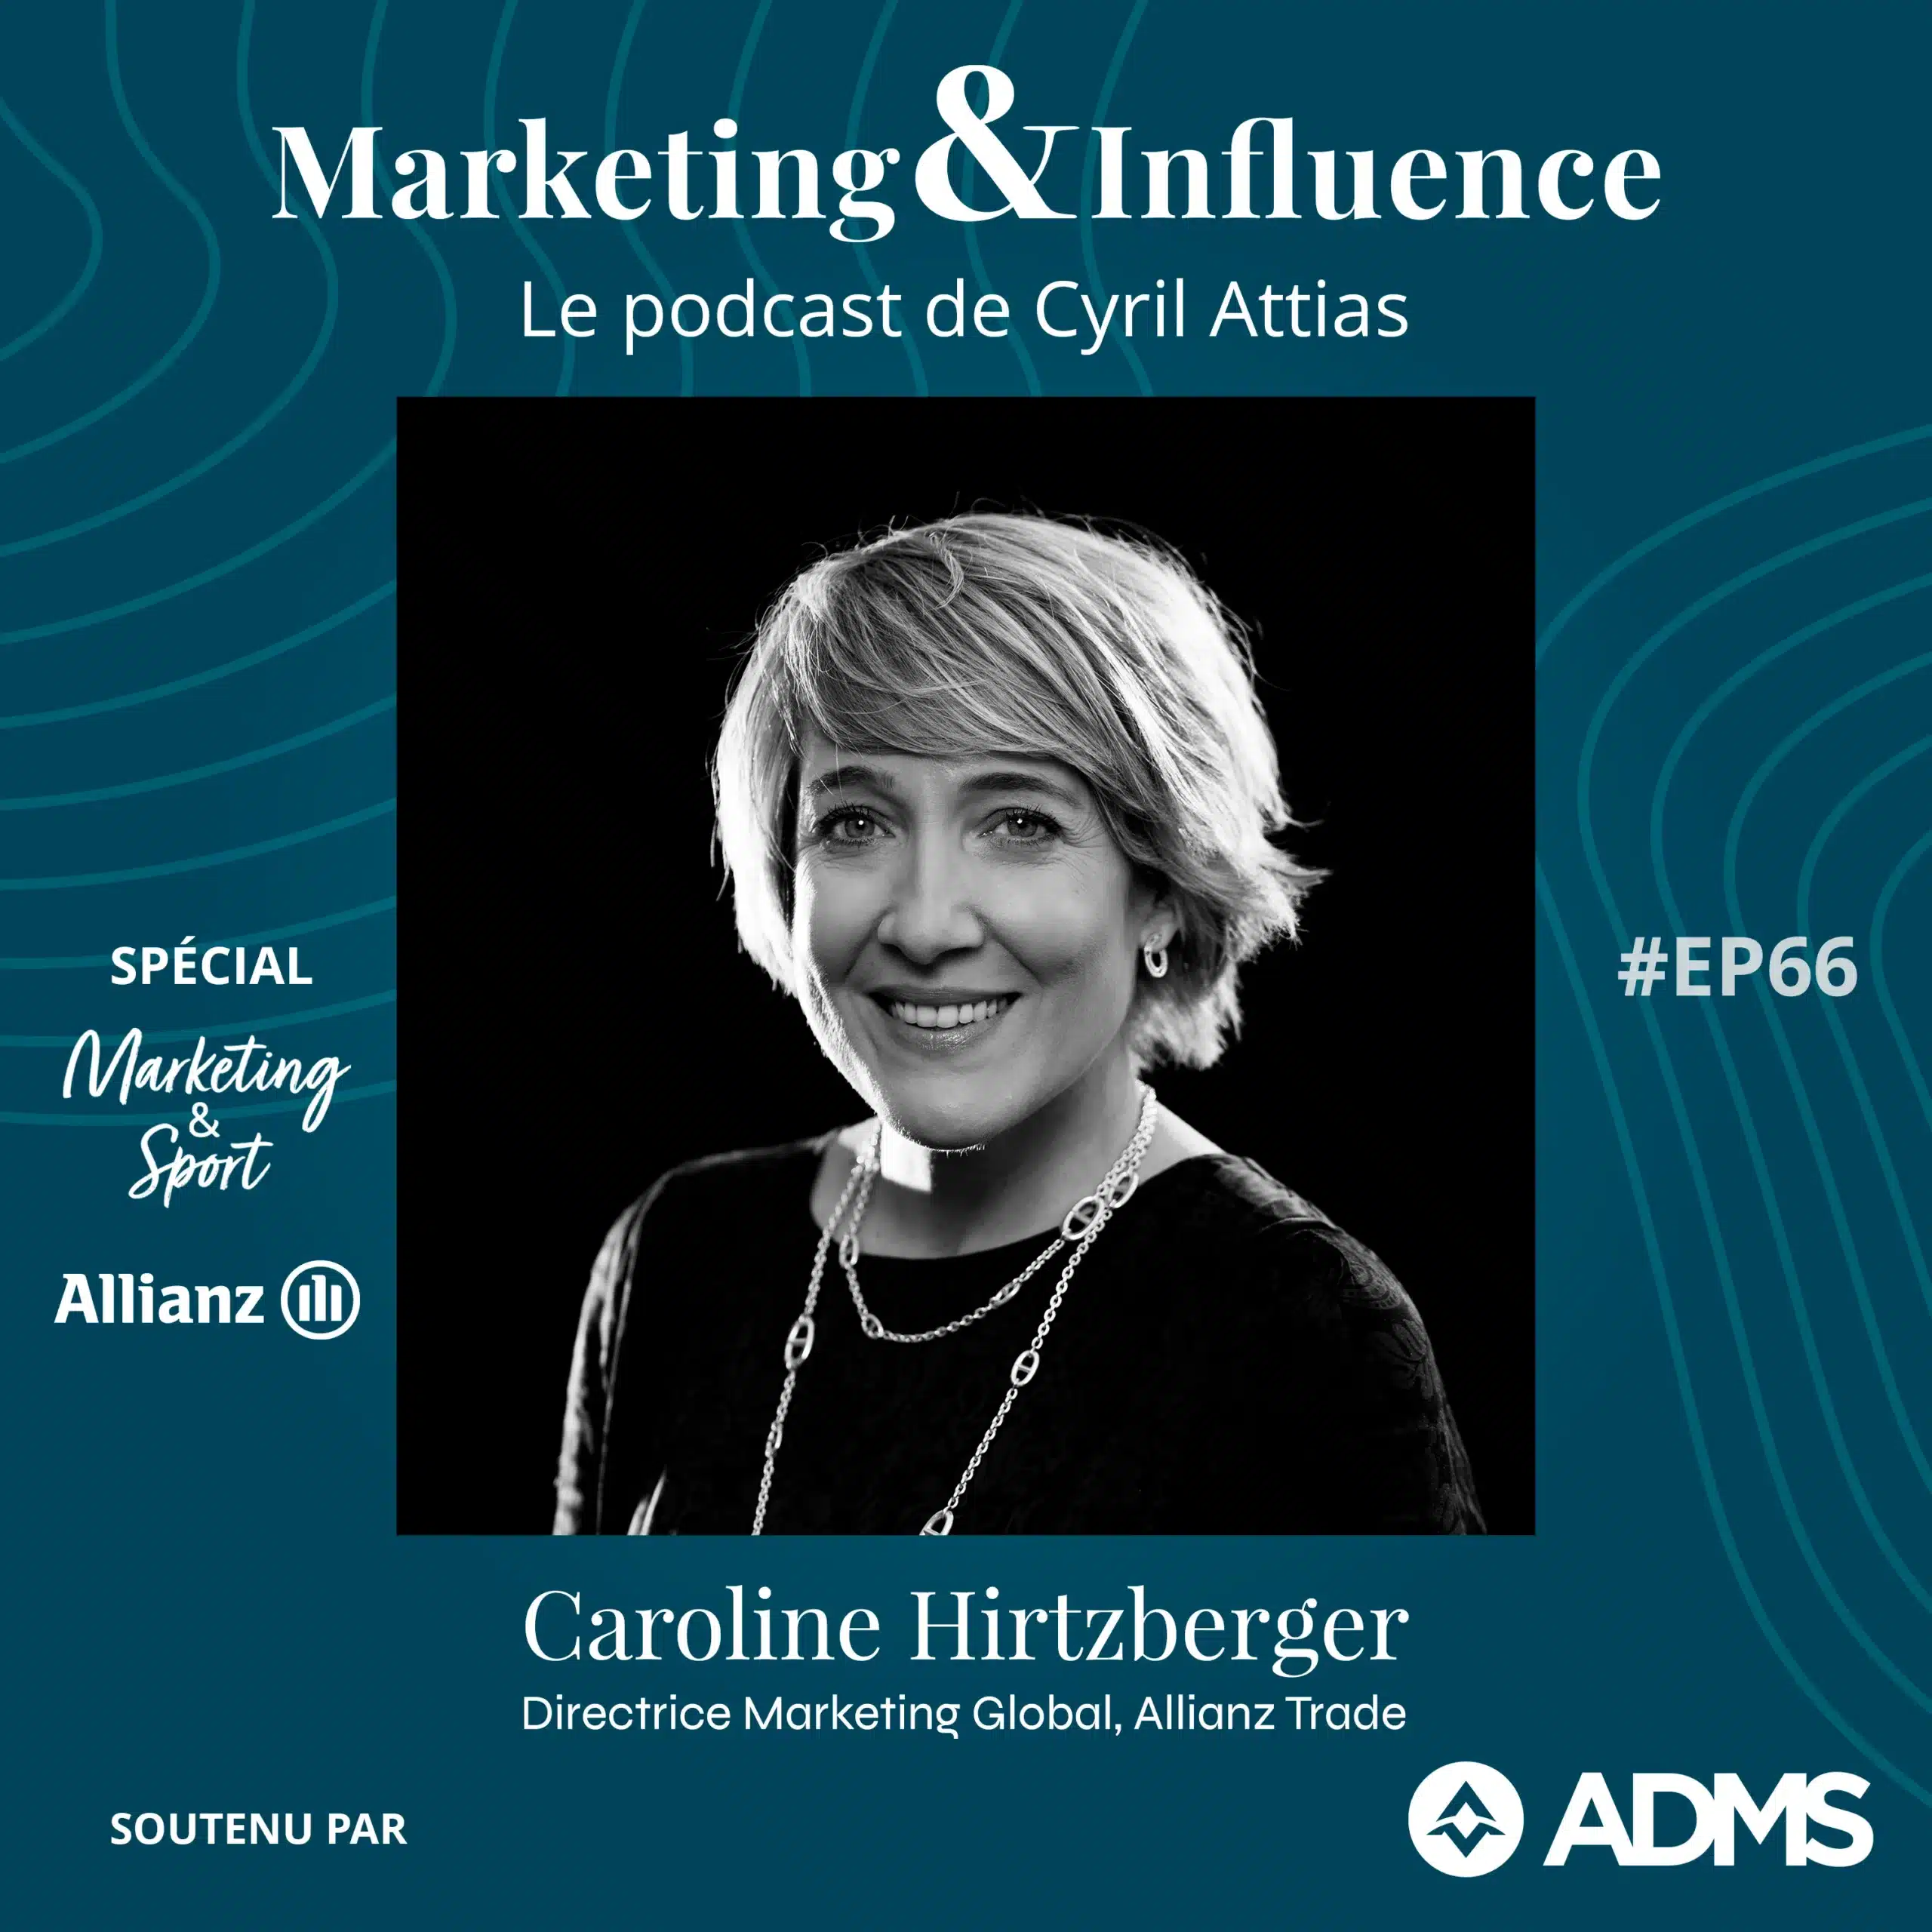 Caroline Hirtzberger - Allianz Trade